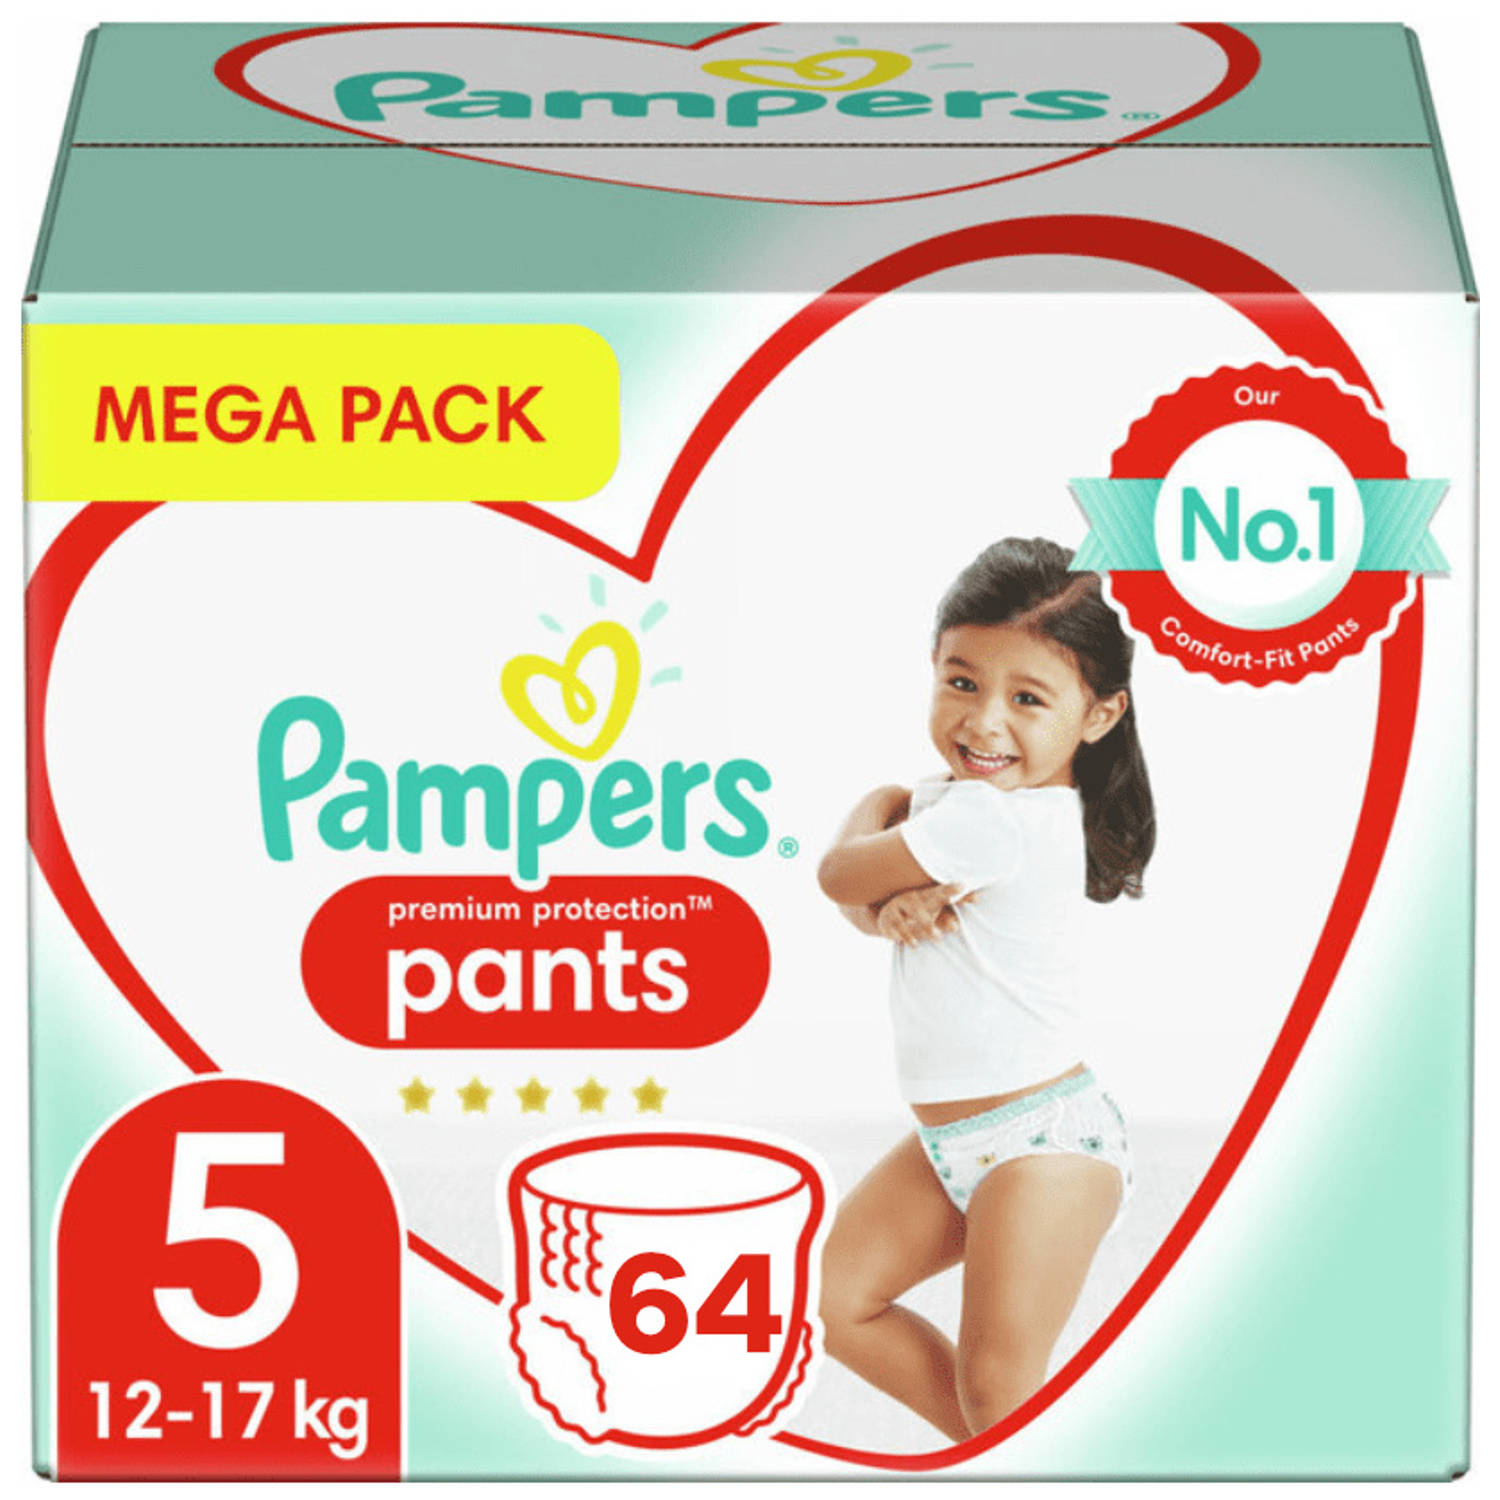 Pampers Broek Premium Protection maat 5 junior, 12-17 kg, enkele verpakking, 16 stuks